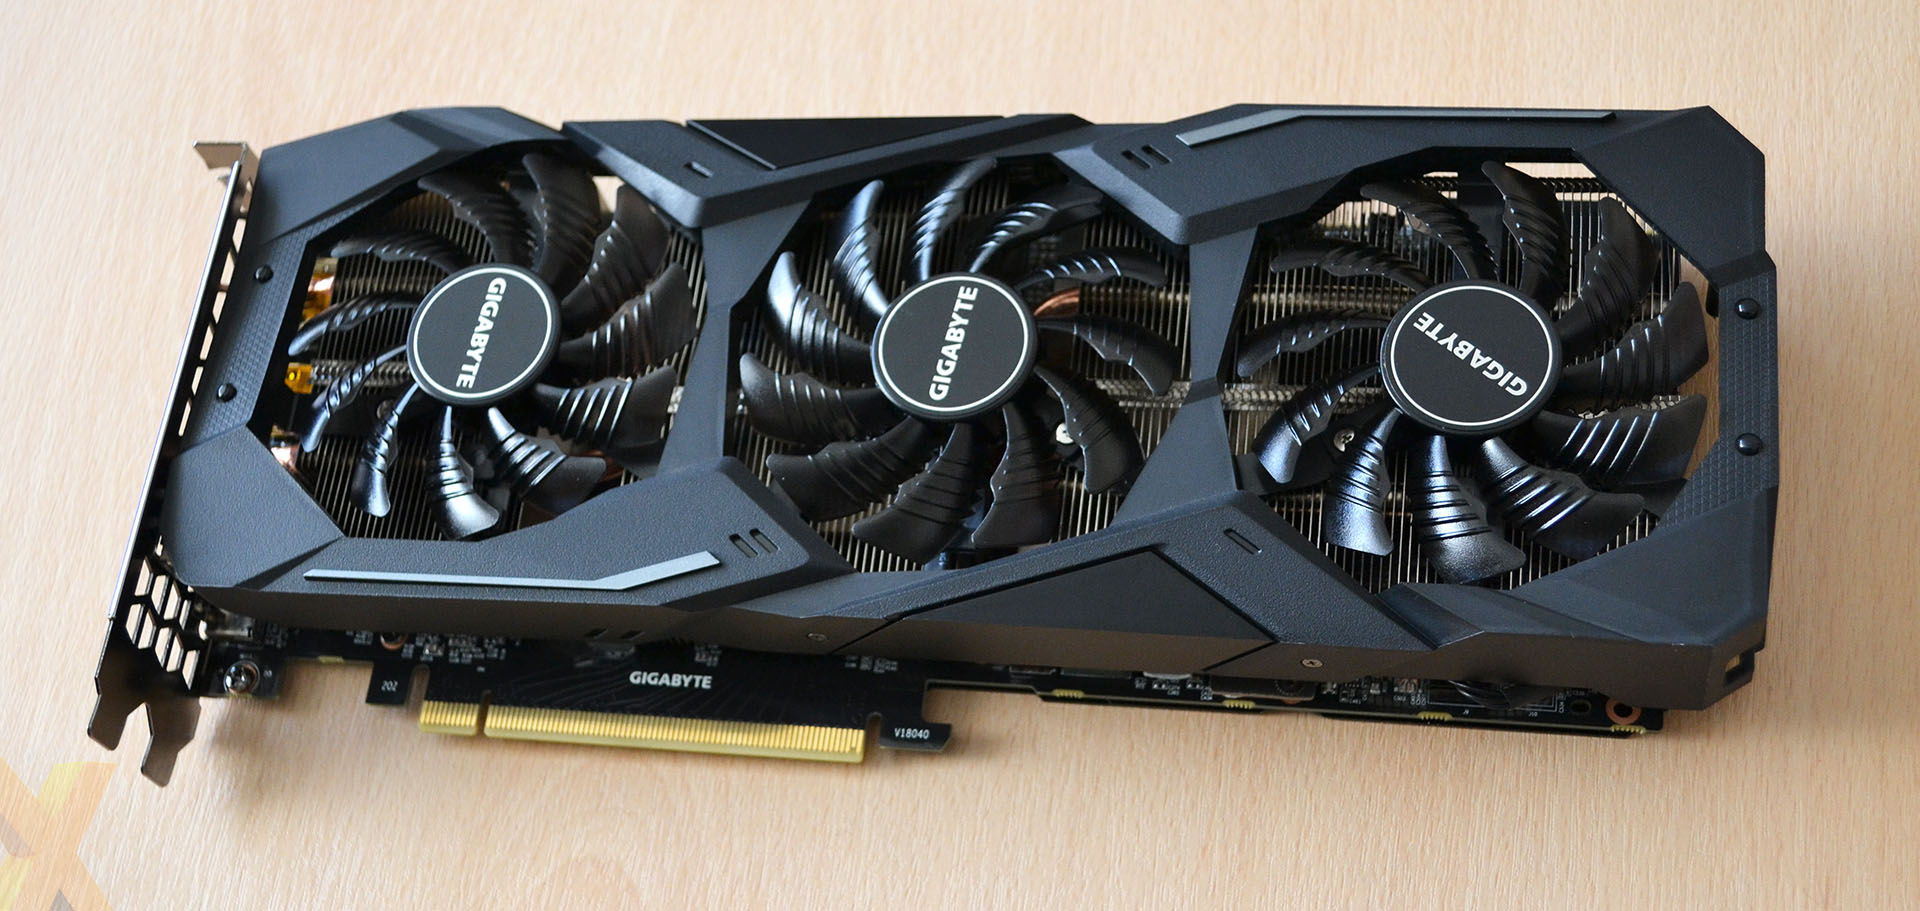 Review: Gigabyte GeForce RTX 2070 WindForce - Graphics - HEXUS.net